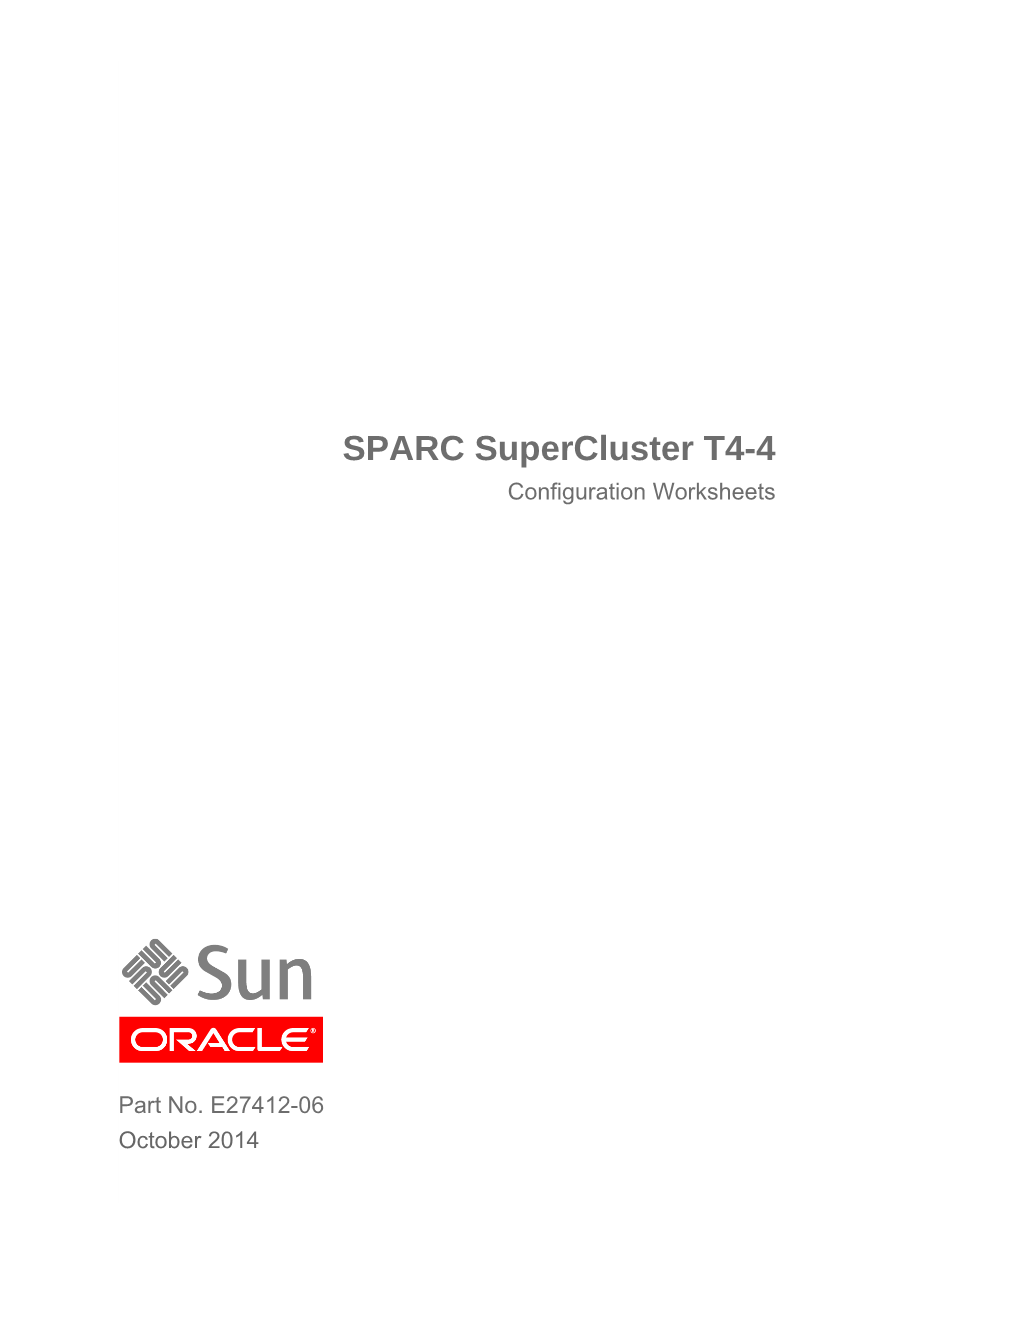 SPARC Supercluster T4-4 Configuration Worksheets